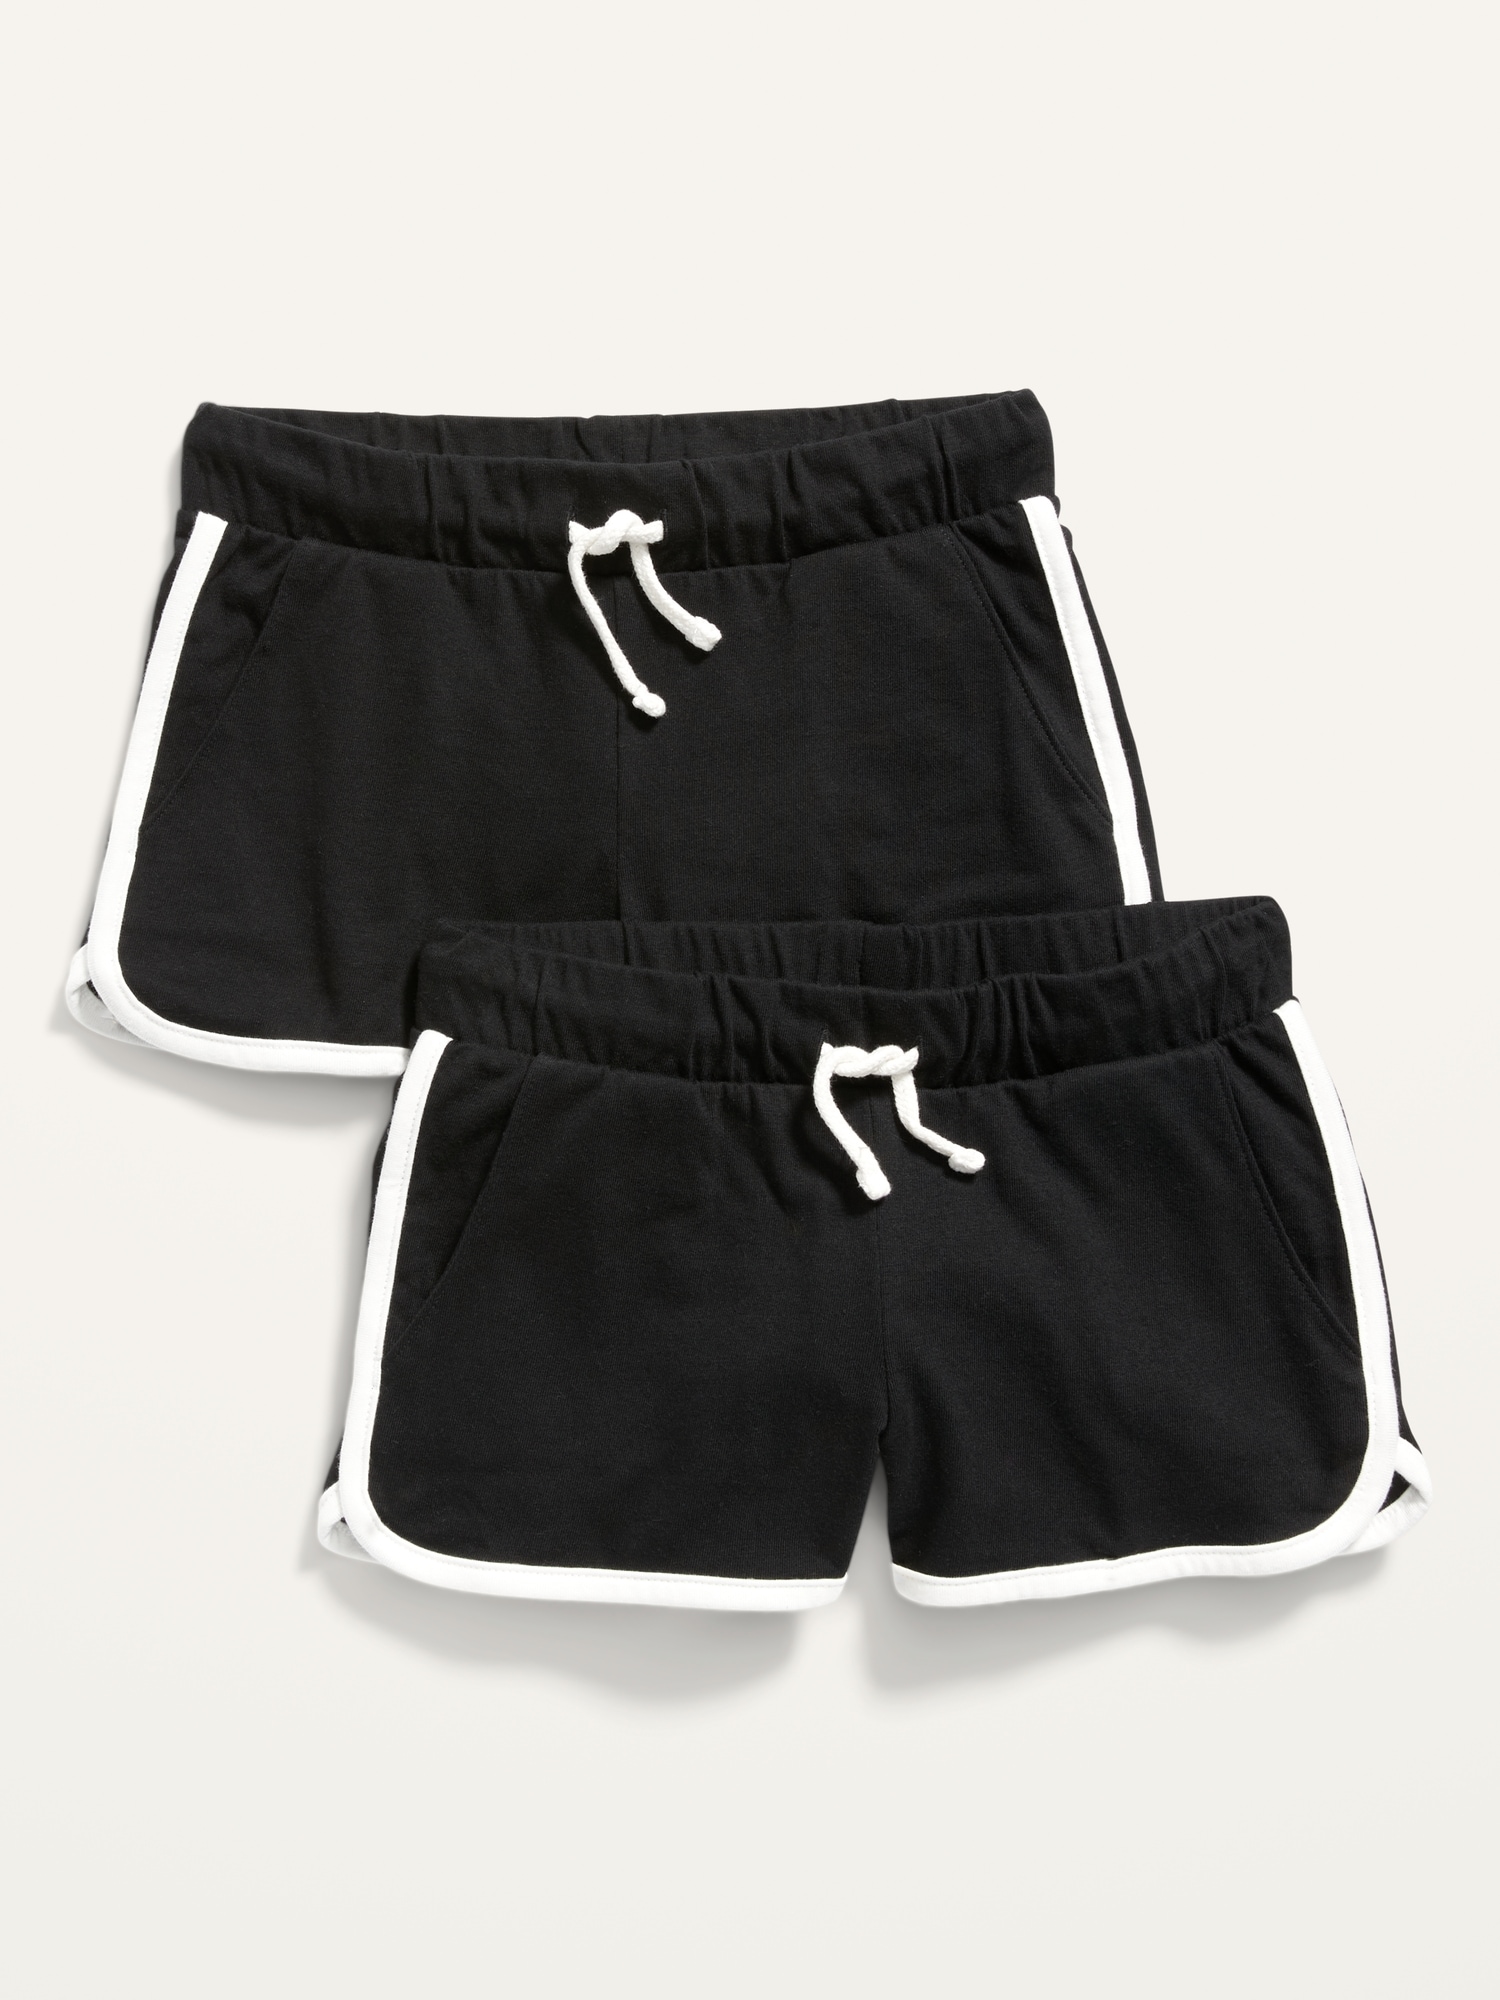 Old Navy Dolphin-Hem Cheer Shorts 2-Pack for Girls black. 1